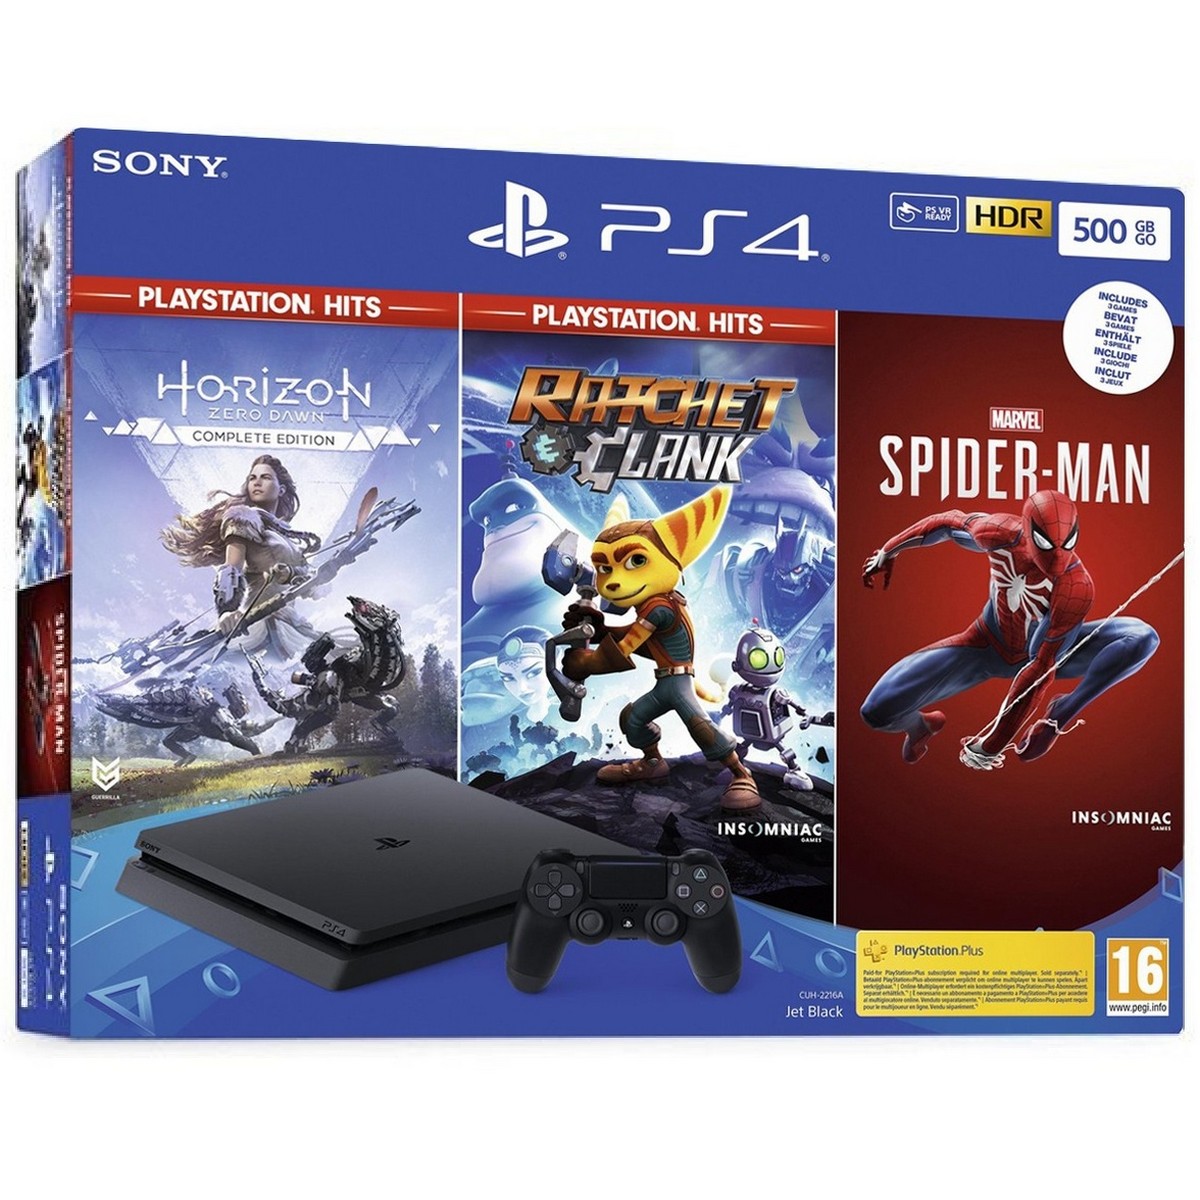 PlayStation 4 Slim 500 GB - Horizon Zero Dawn, Marvel's Spider-Man and Ratchet and Clank Bundle